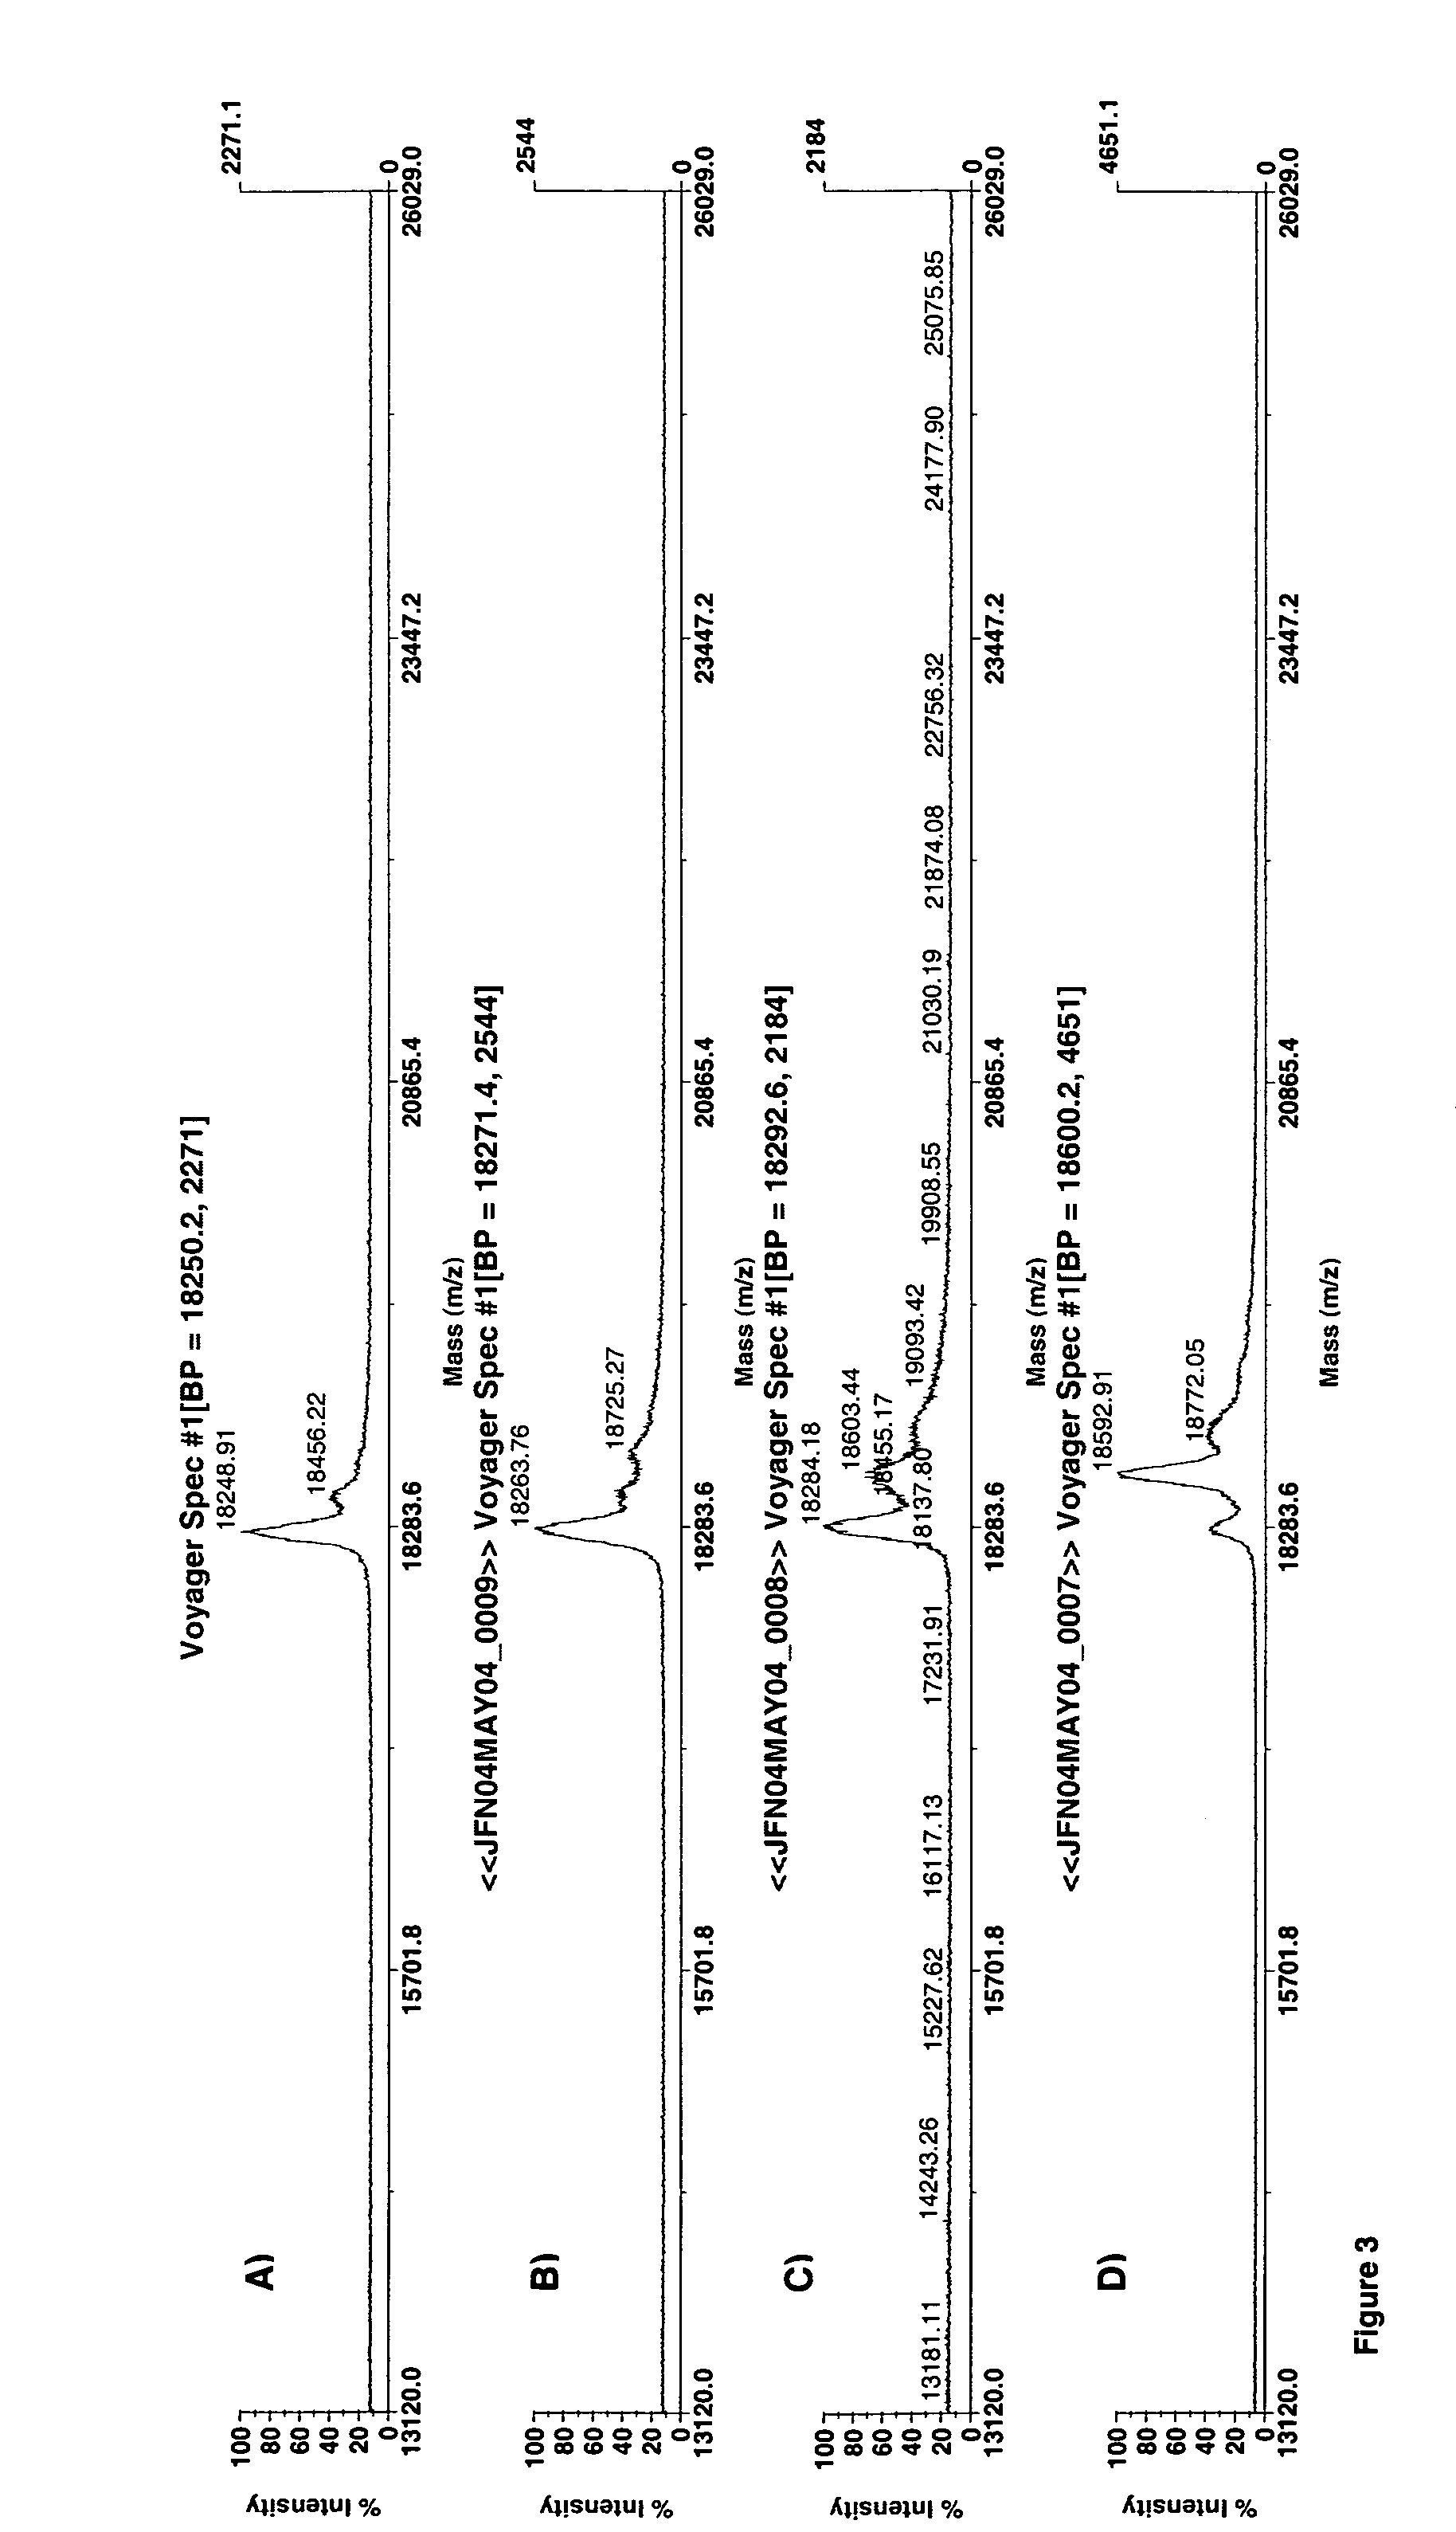 Formation of novel erythropoietin conjugates using transglutaminase